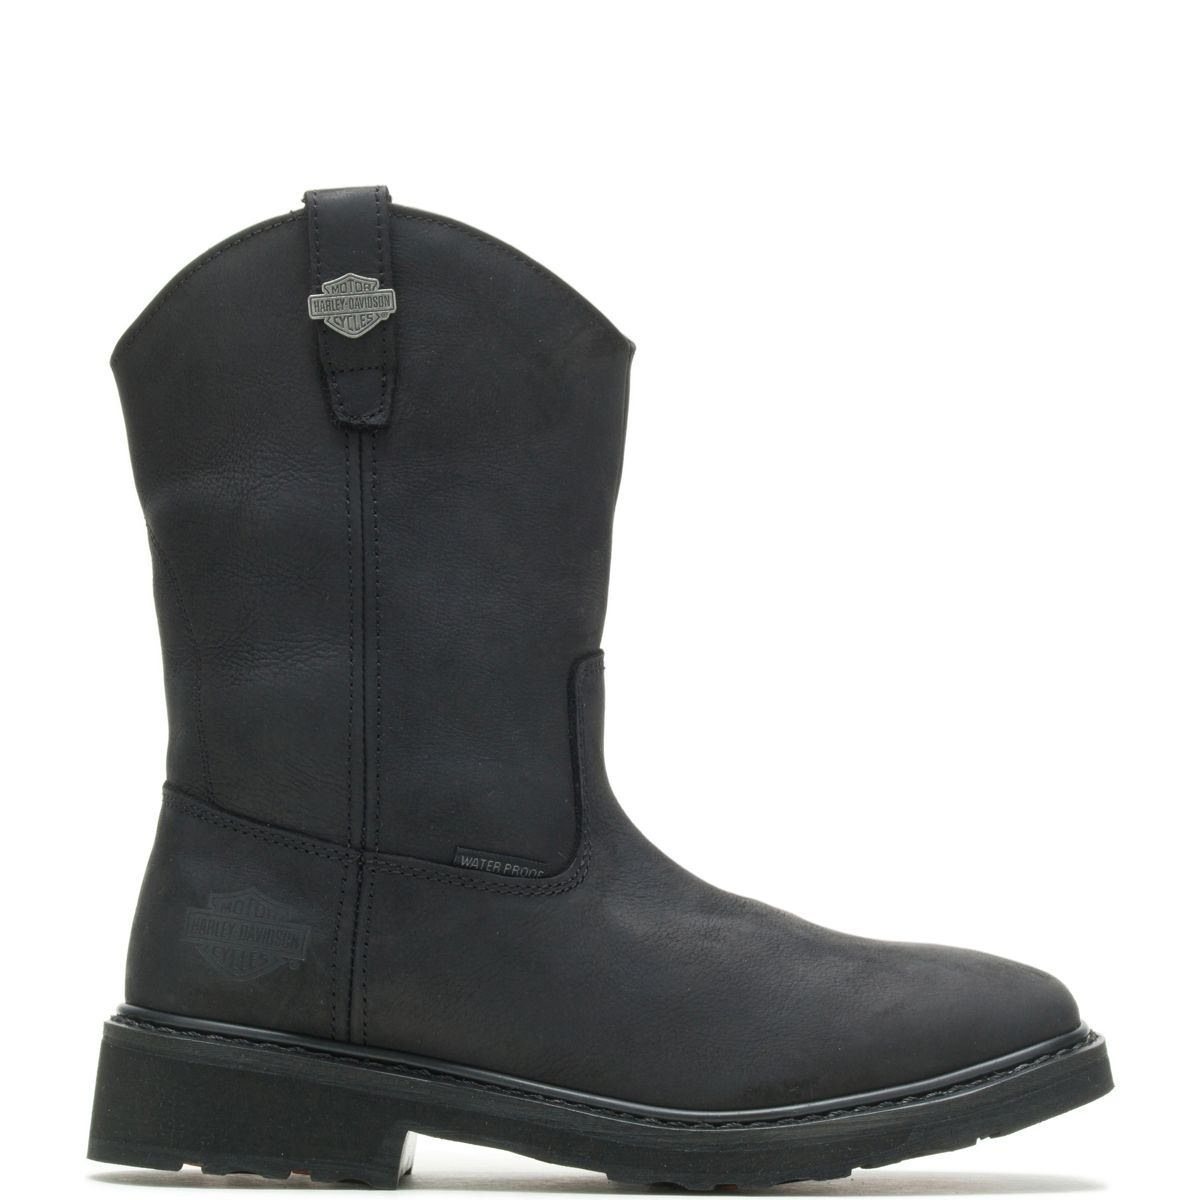 HARLEY-DAVIDSON WORK Men's Altman Western Classic Soft Toe Work Boot Black - D93561 Black/black - Black/black, 9